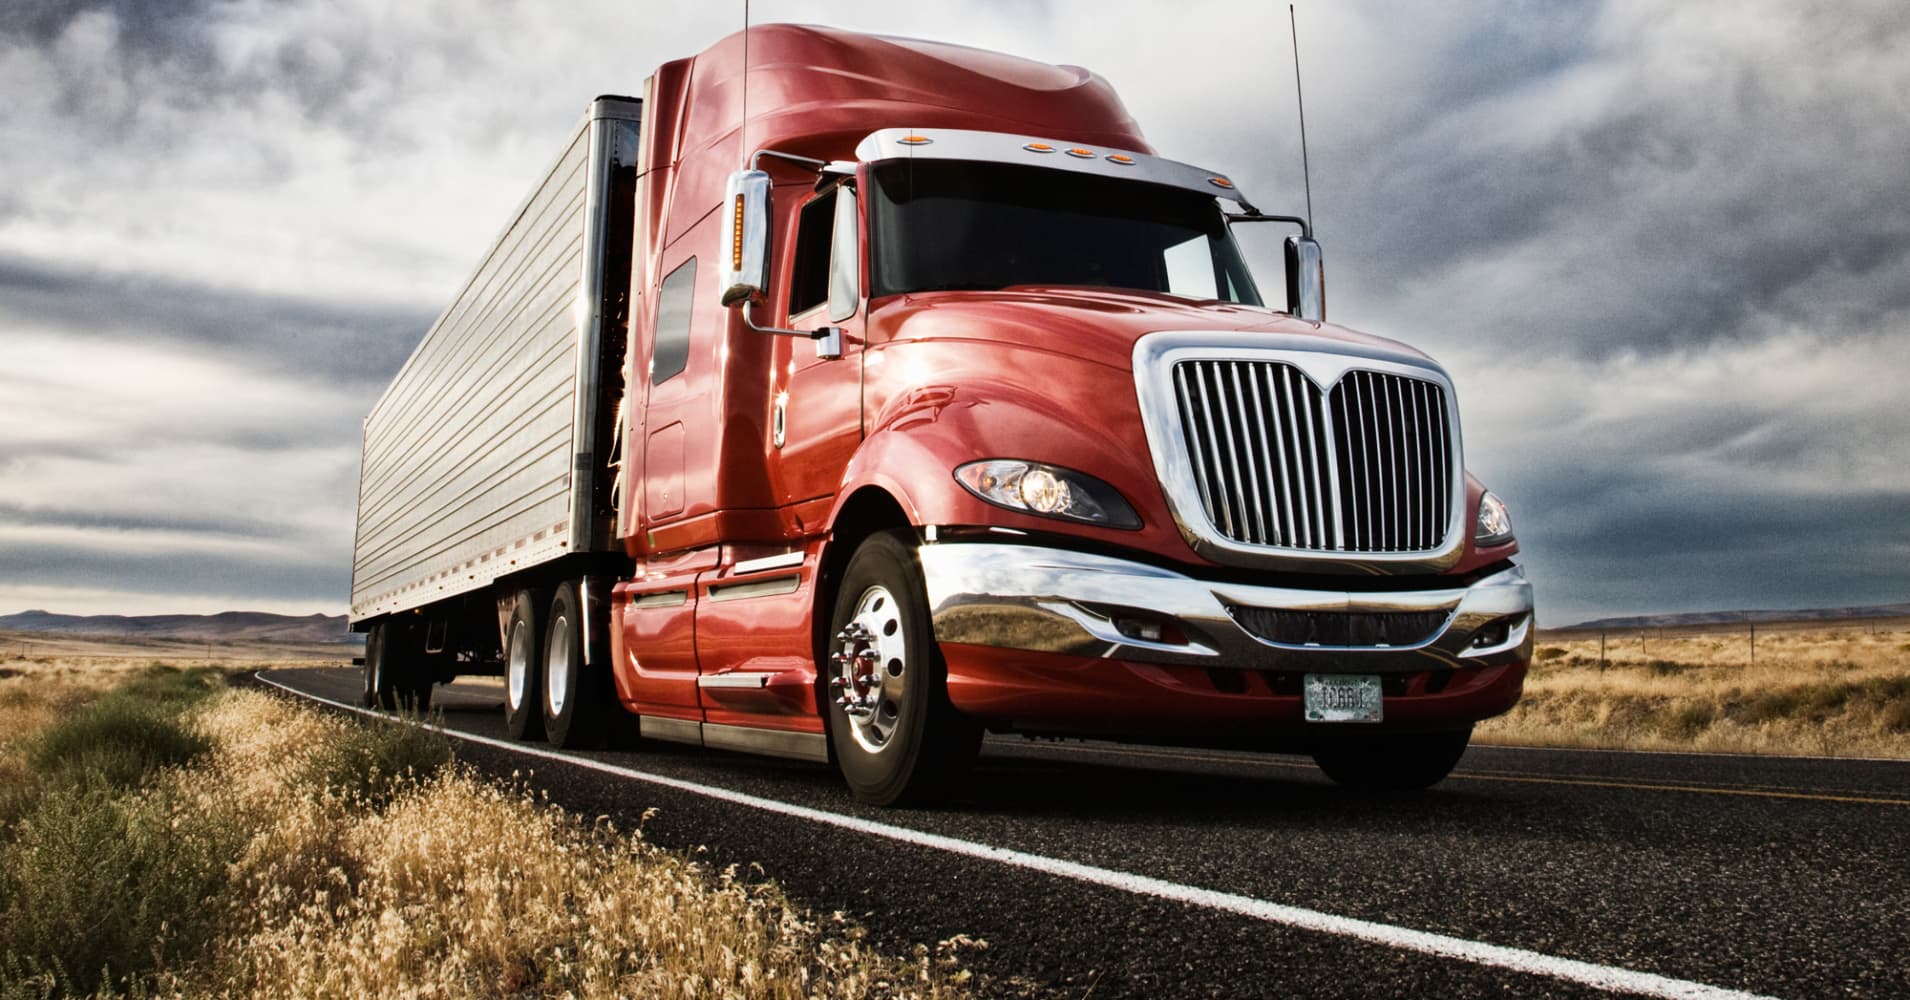 Trucking faces a capacity shortage as demand rises